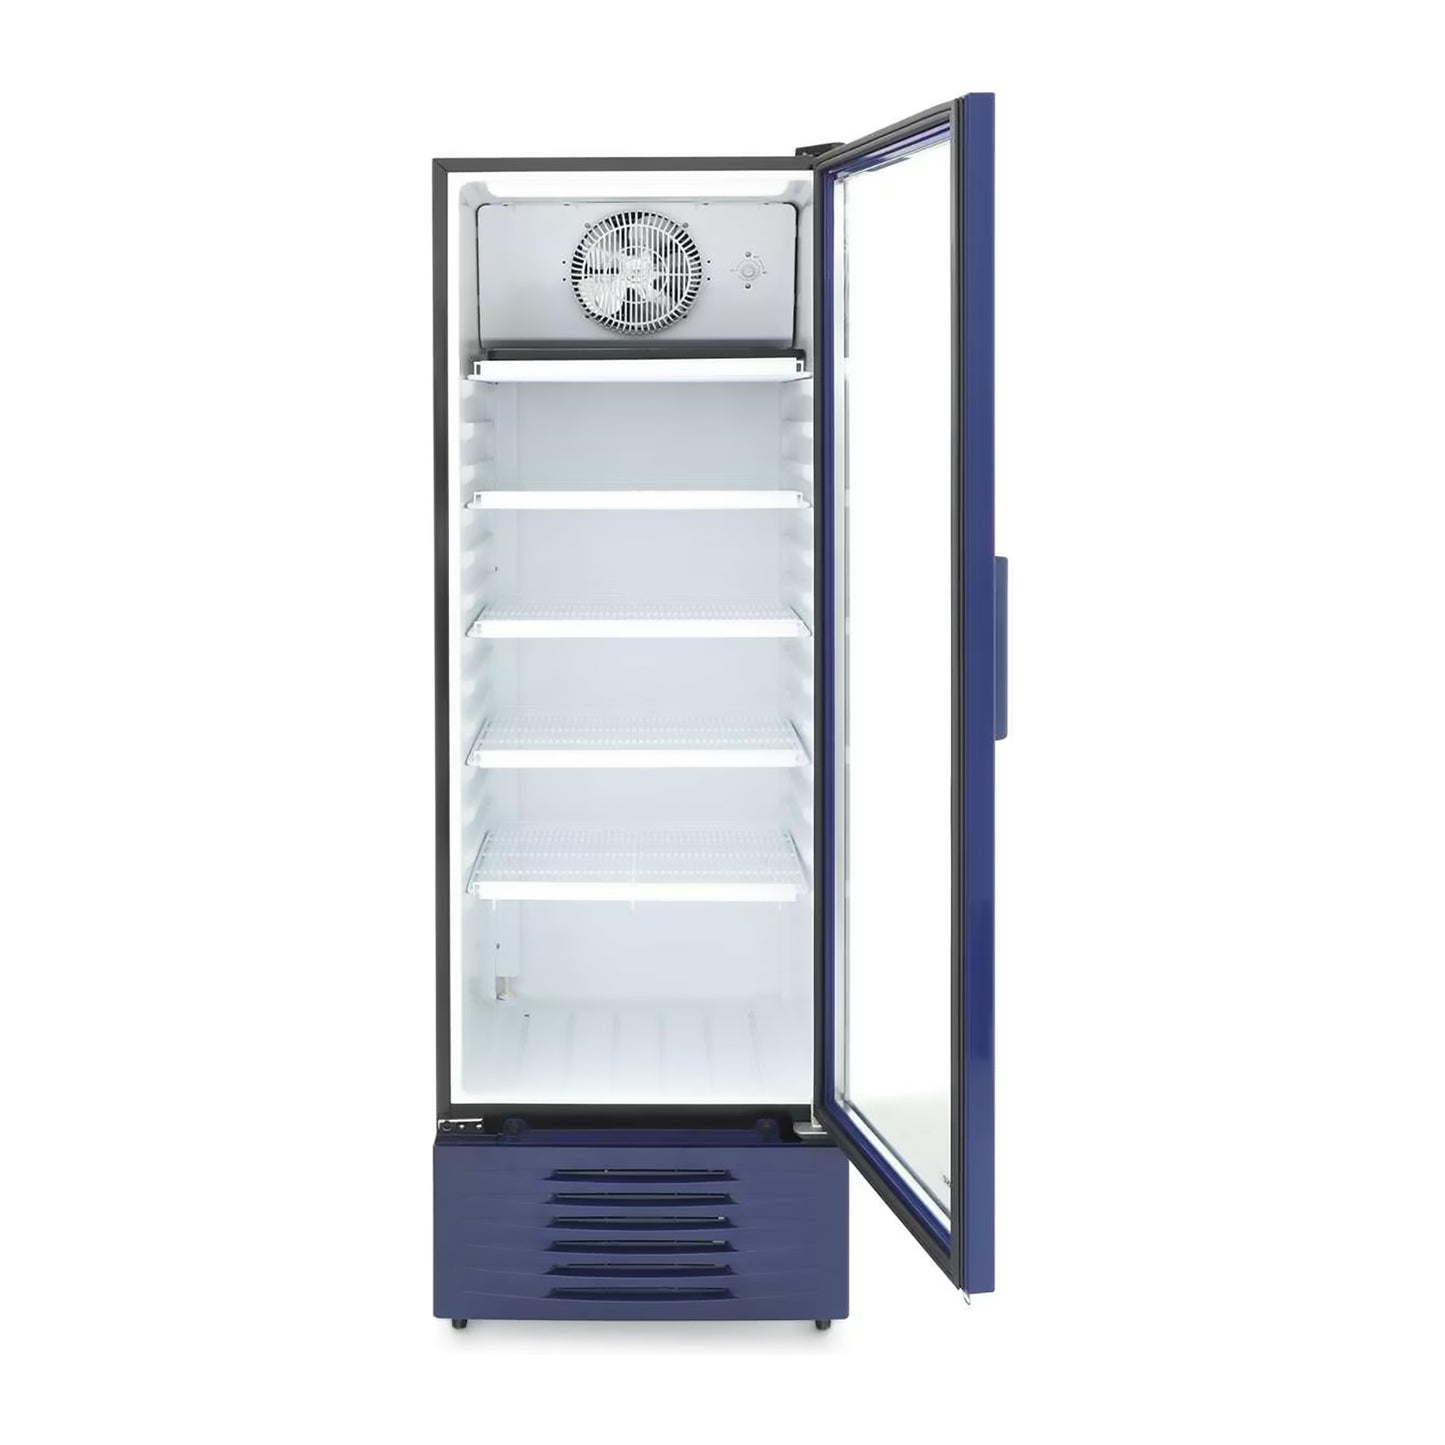 Refrigerador Vitrina 9 Pies Cúbicos Hisense Azul Puerta de Vidrio CVC494N3AWX